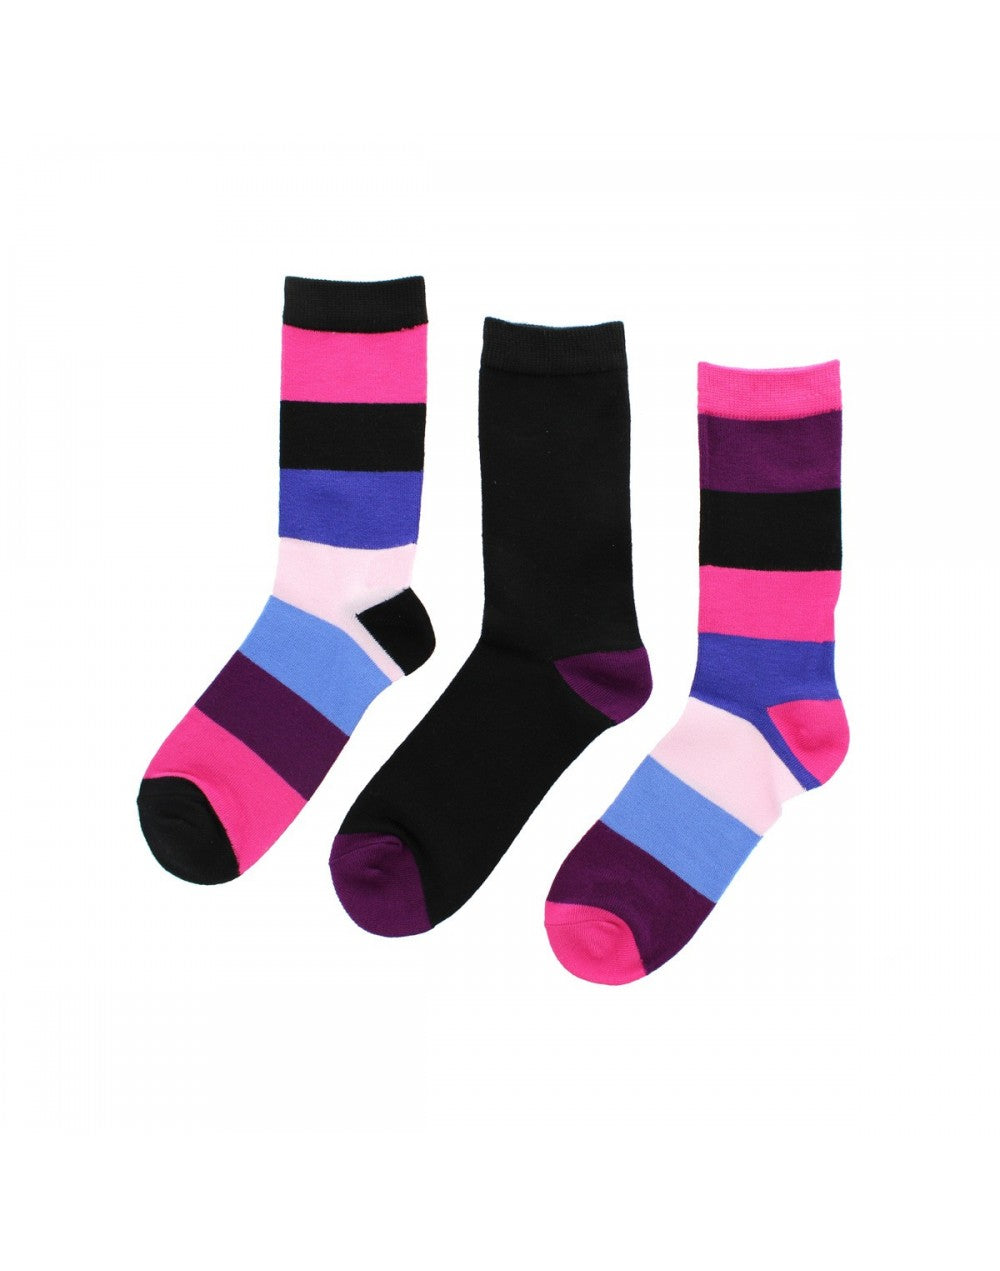 Wild feet Bamboo Black Pink and Purple stripe multipack Socks Size fits 4-8